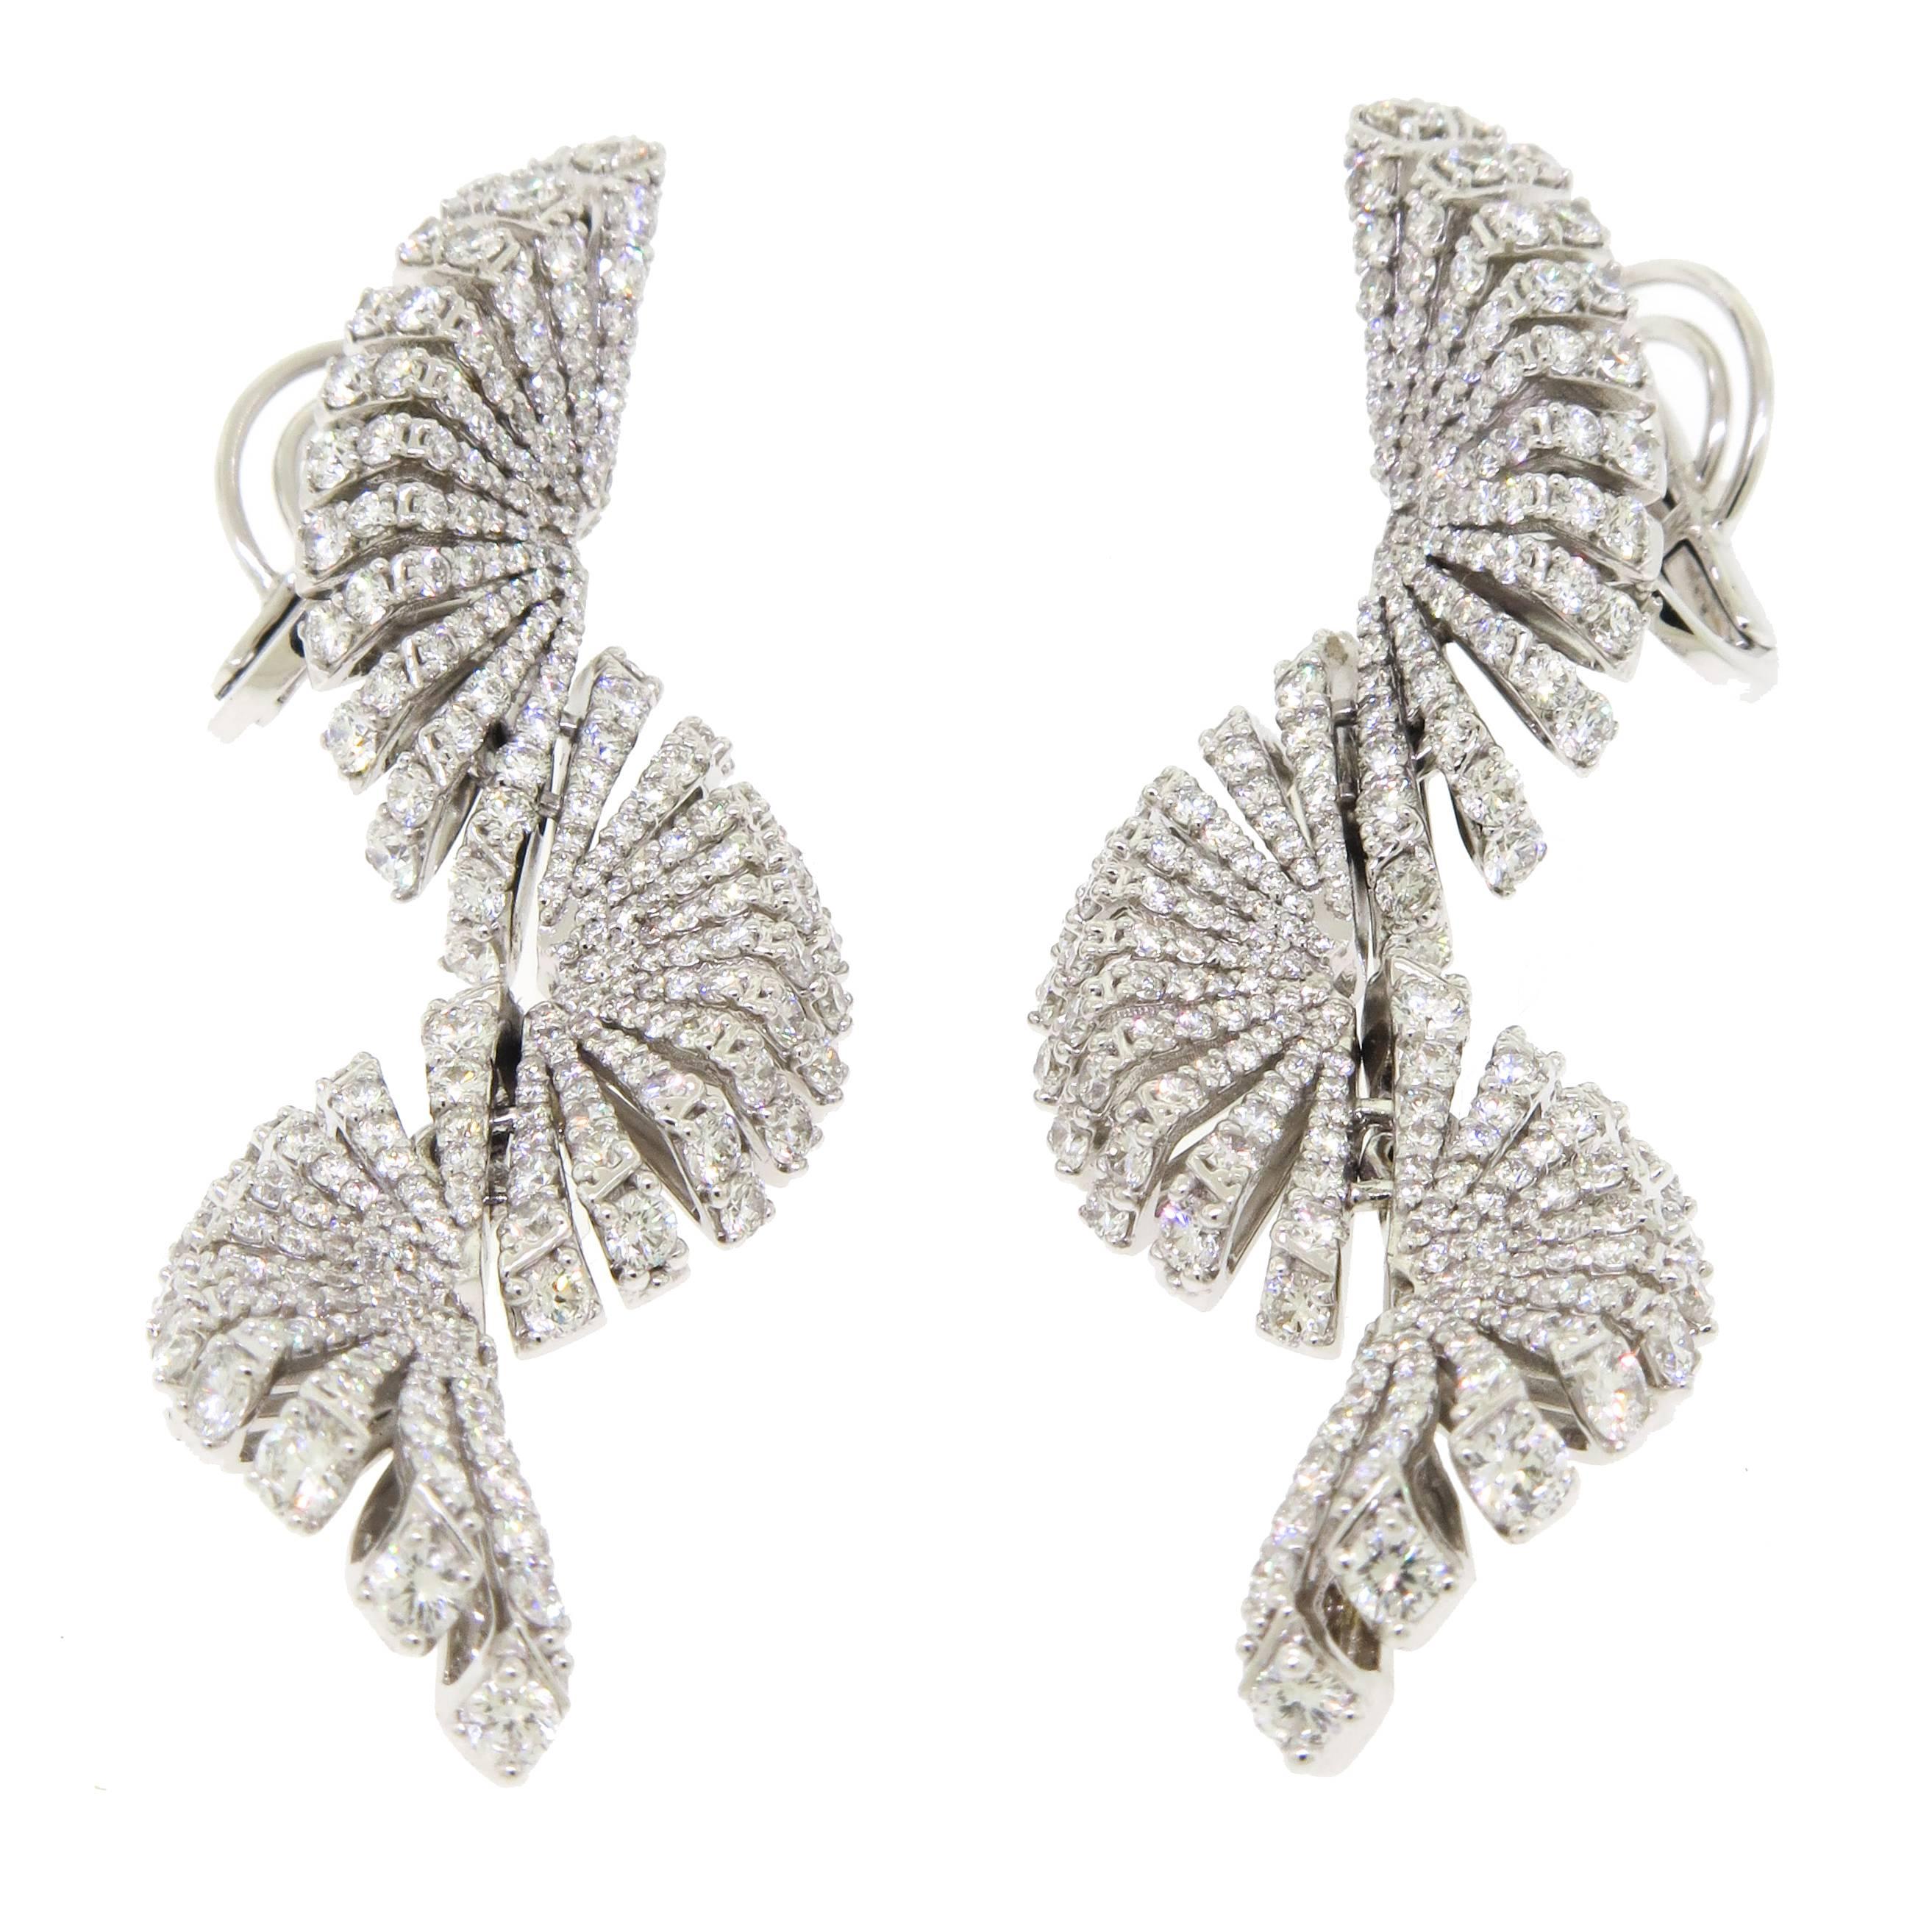 Ventaglio Diamond Earrings by Miseno